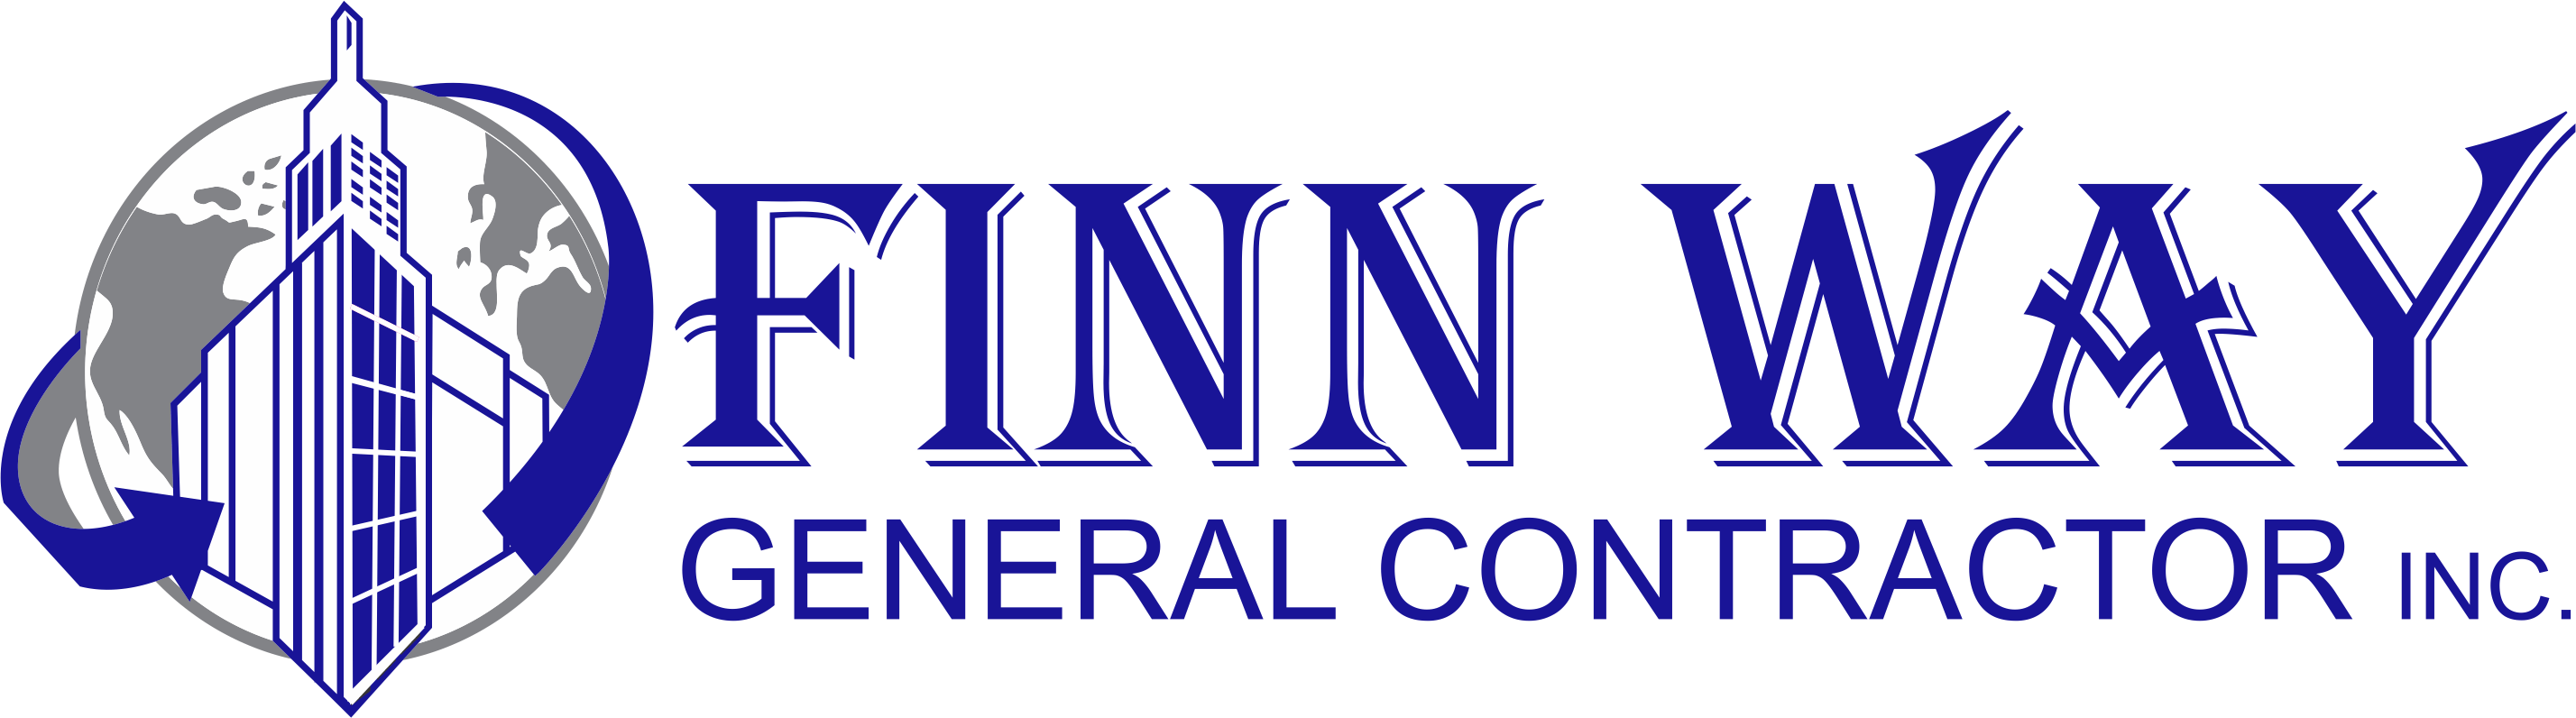 FINNWAY logo -revised 2015-01.gif